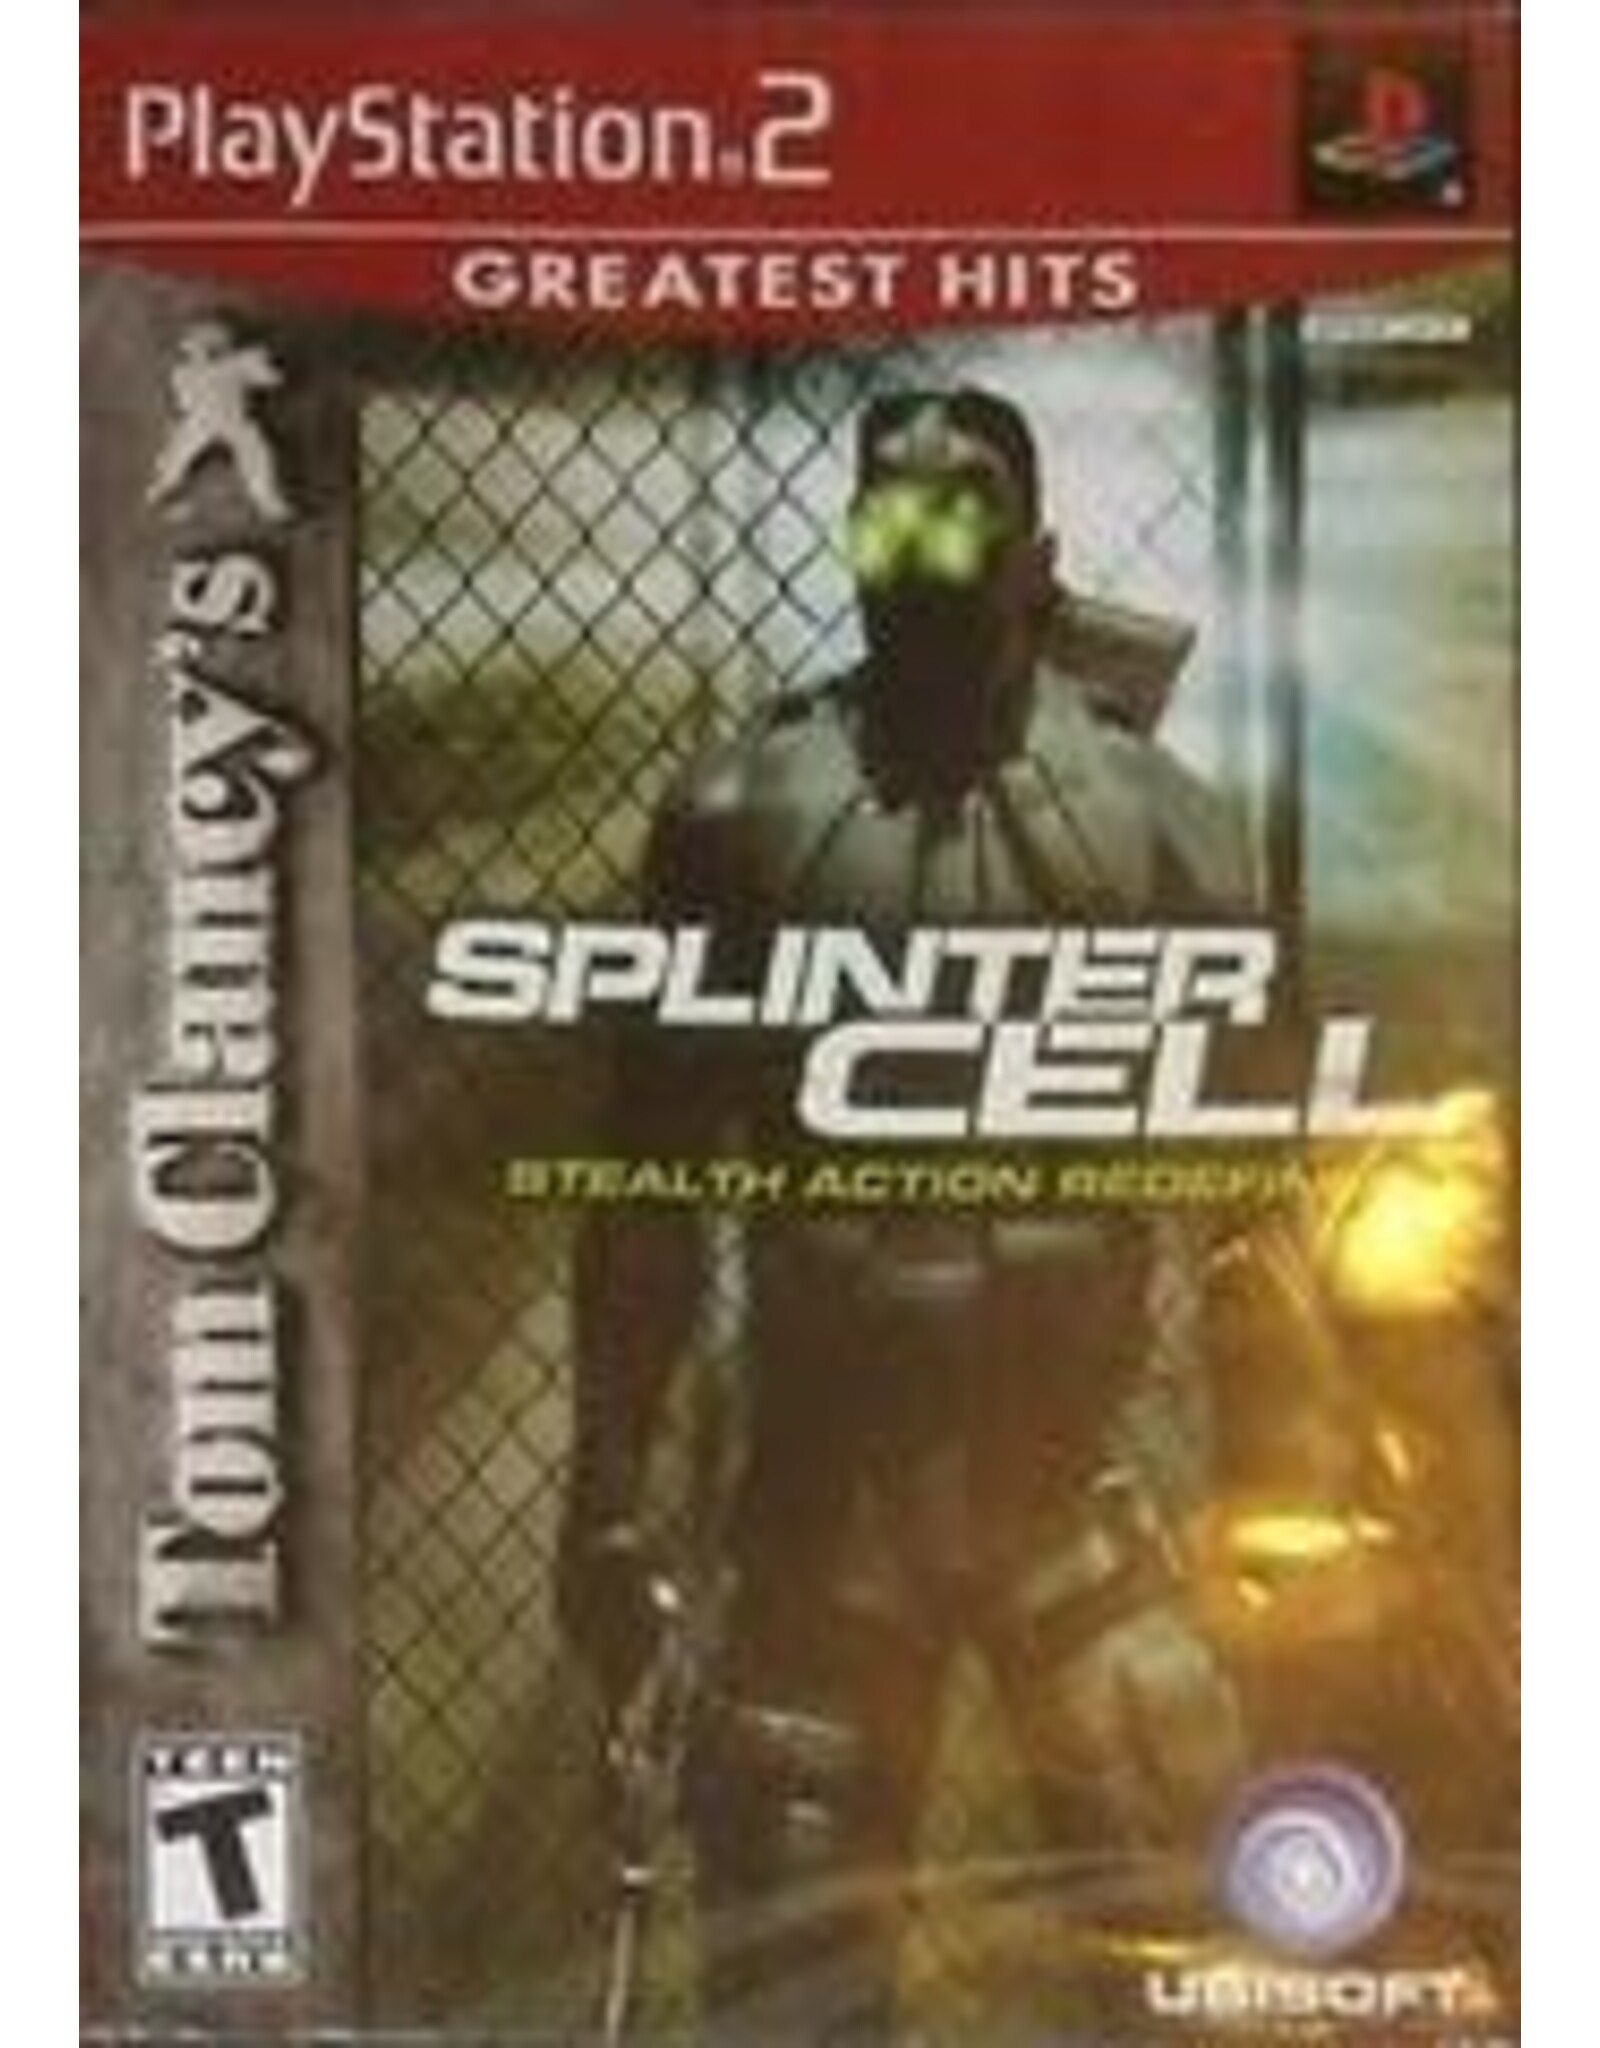 Playstation 2 Splinter Cell (Greatest Hits, CiB, Damaged Sleeve)